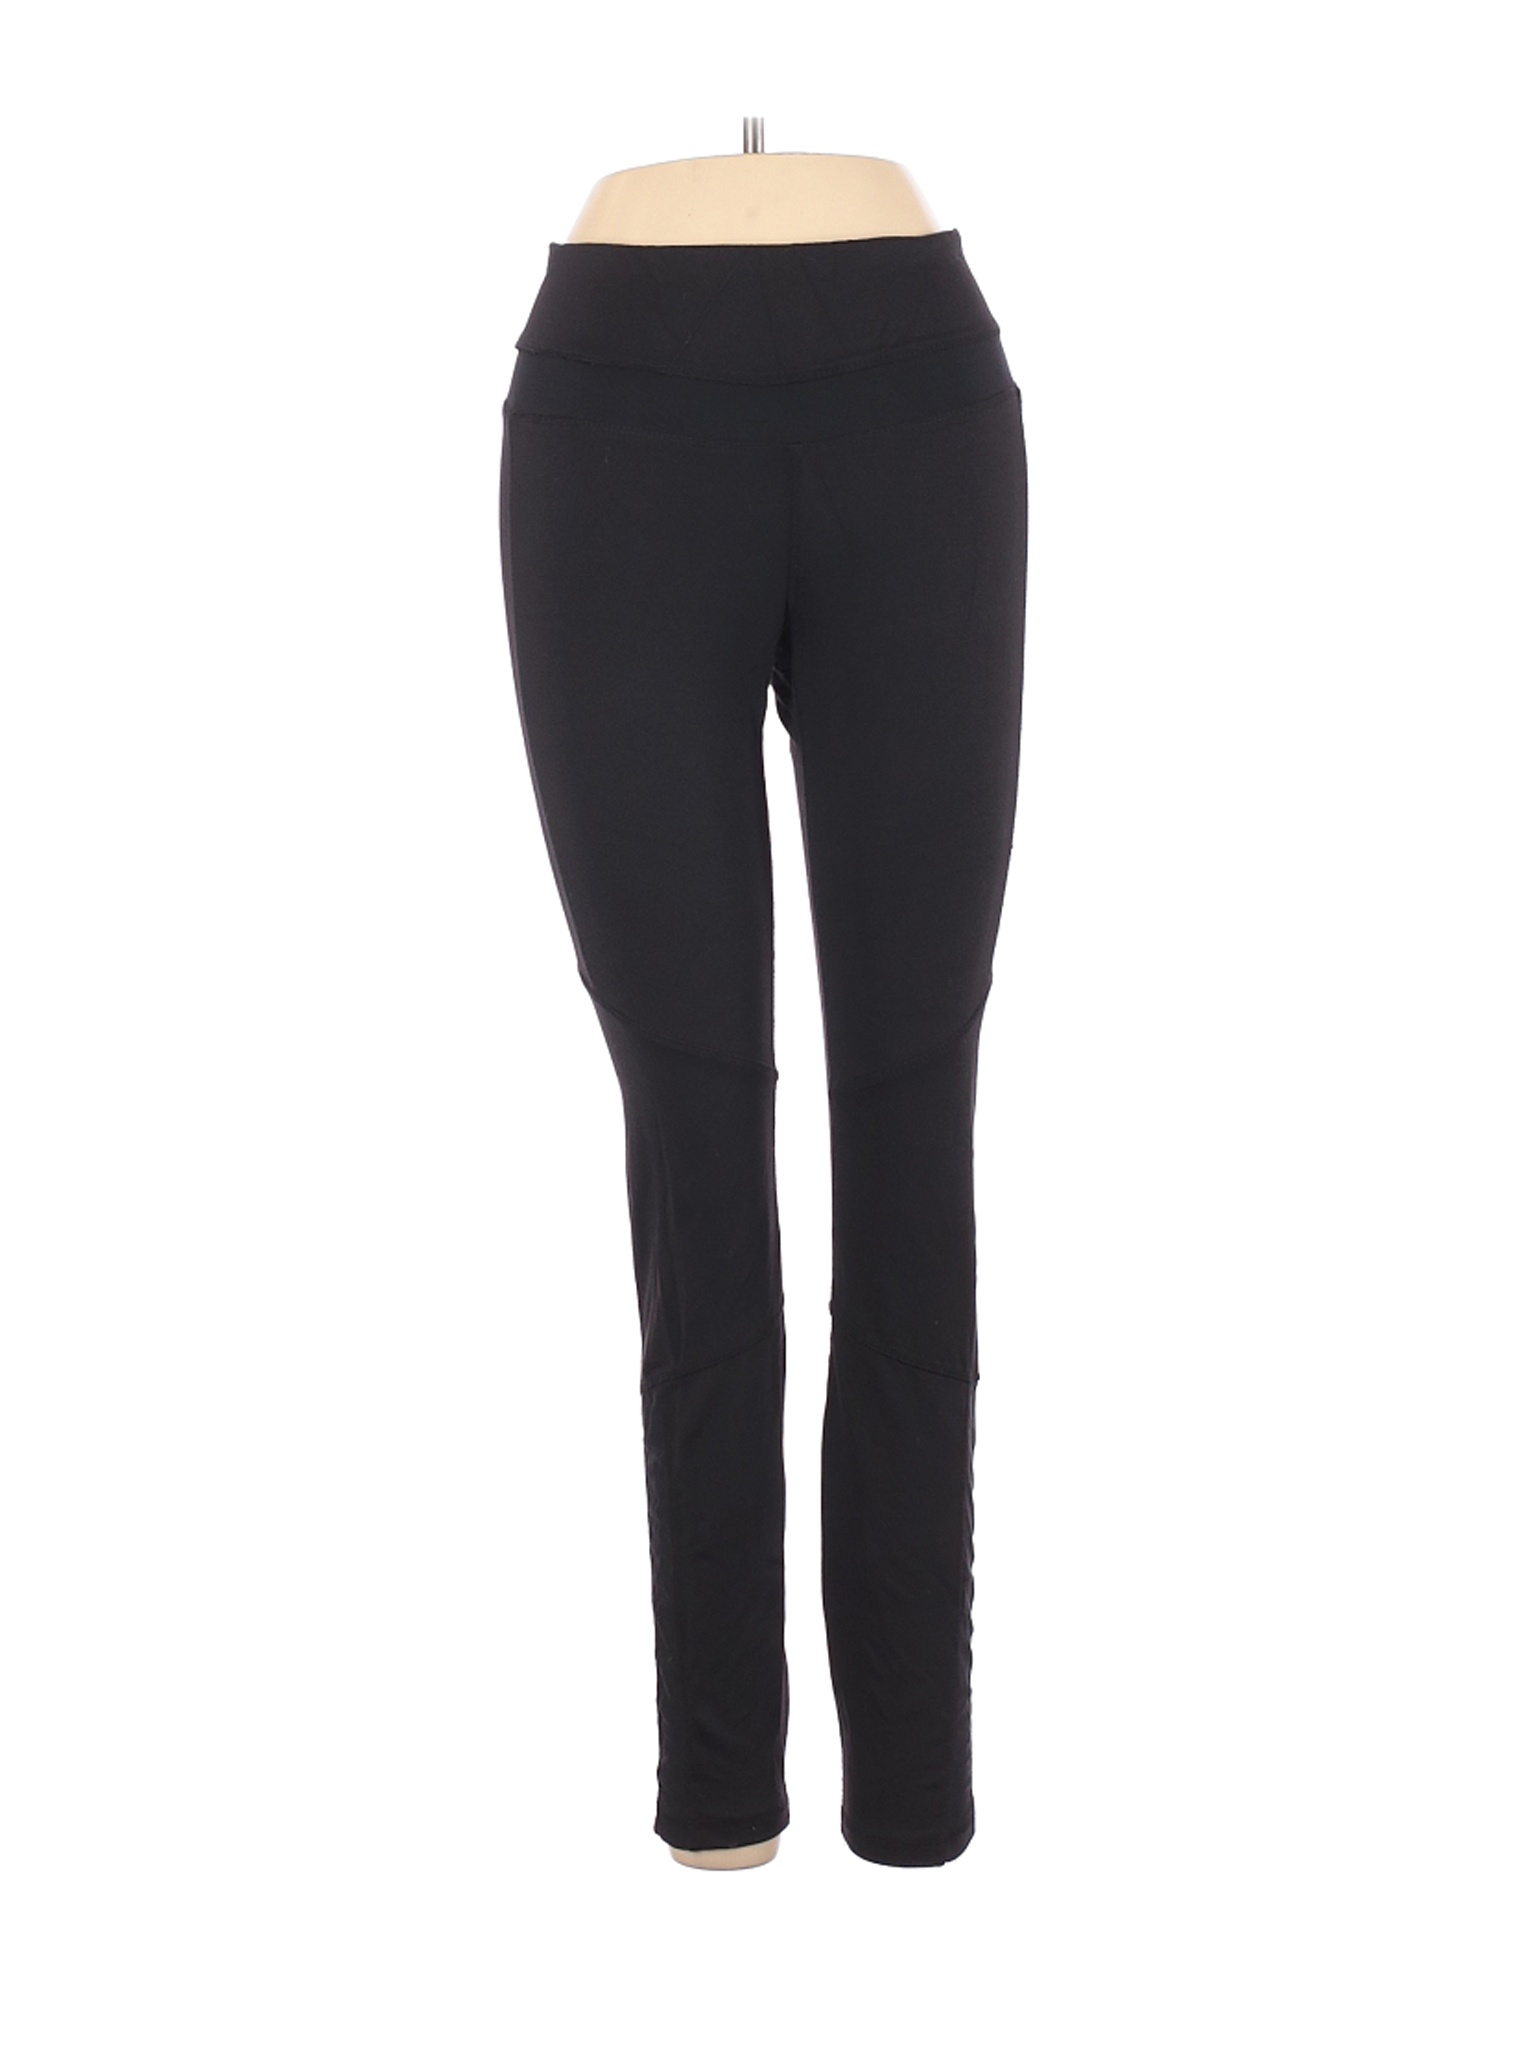 Kyodan Women Black Active Pants S | eBay